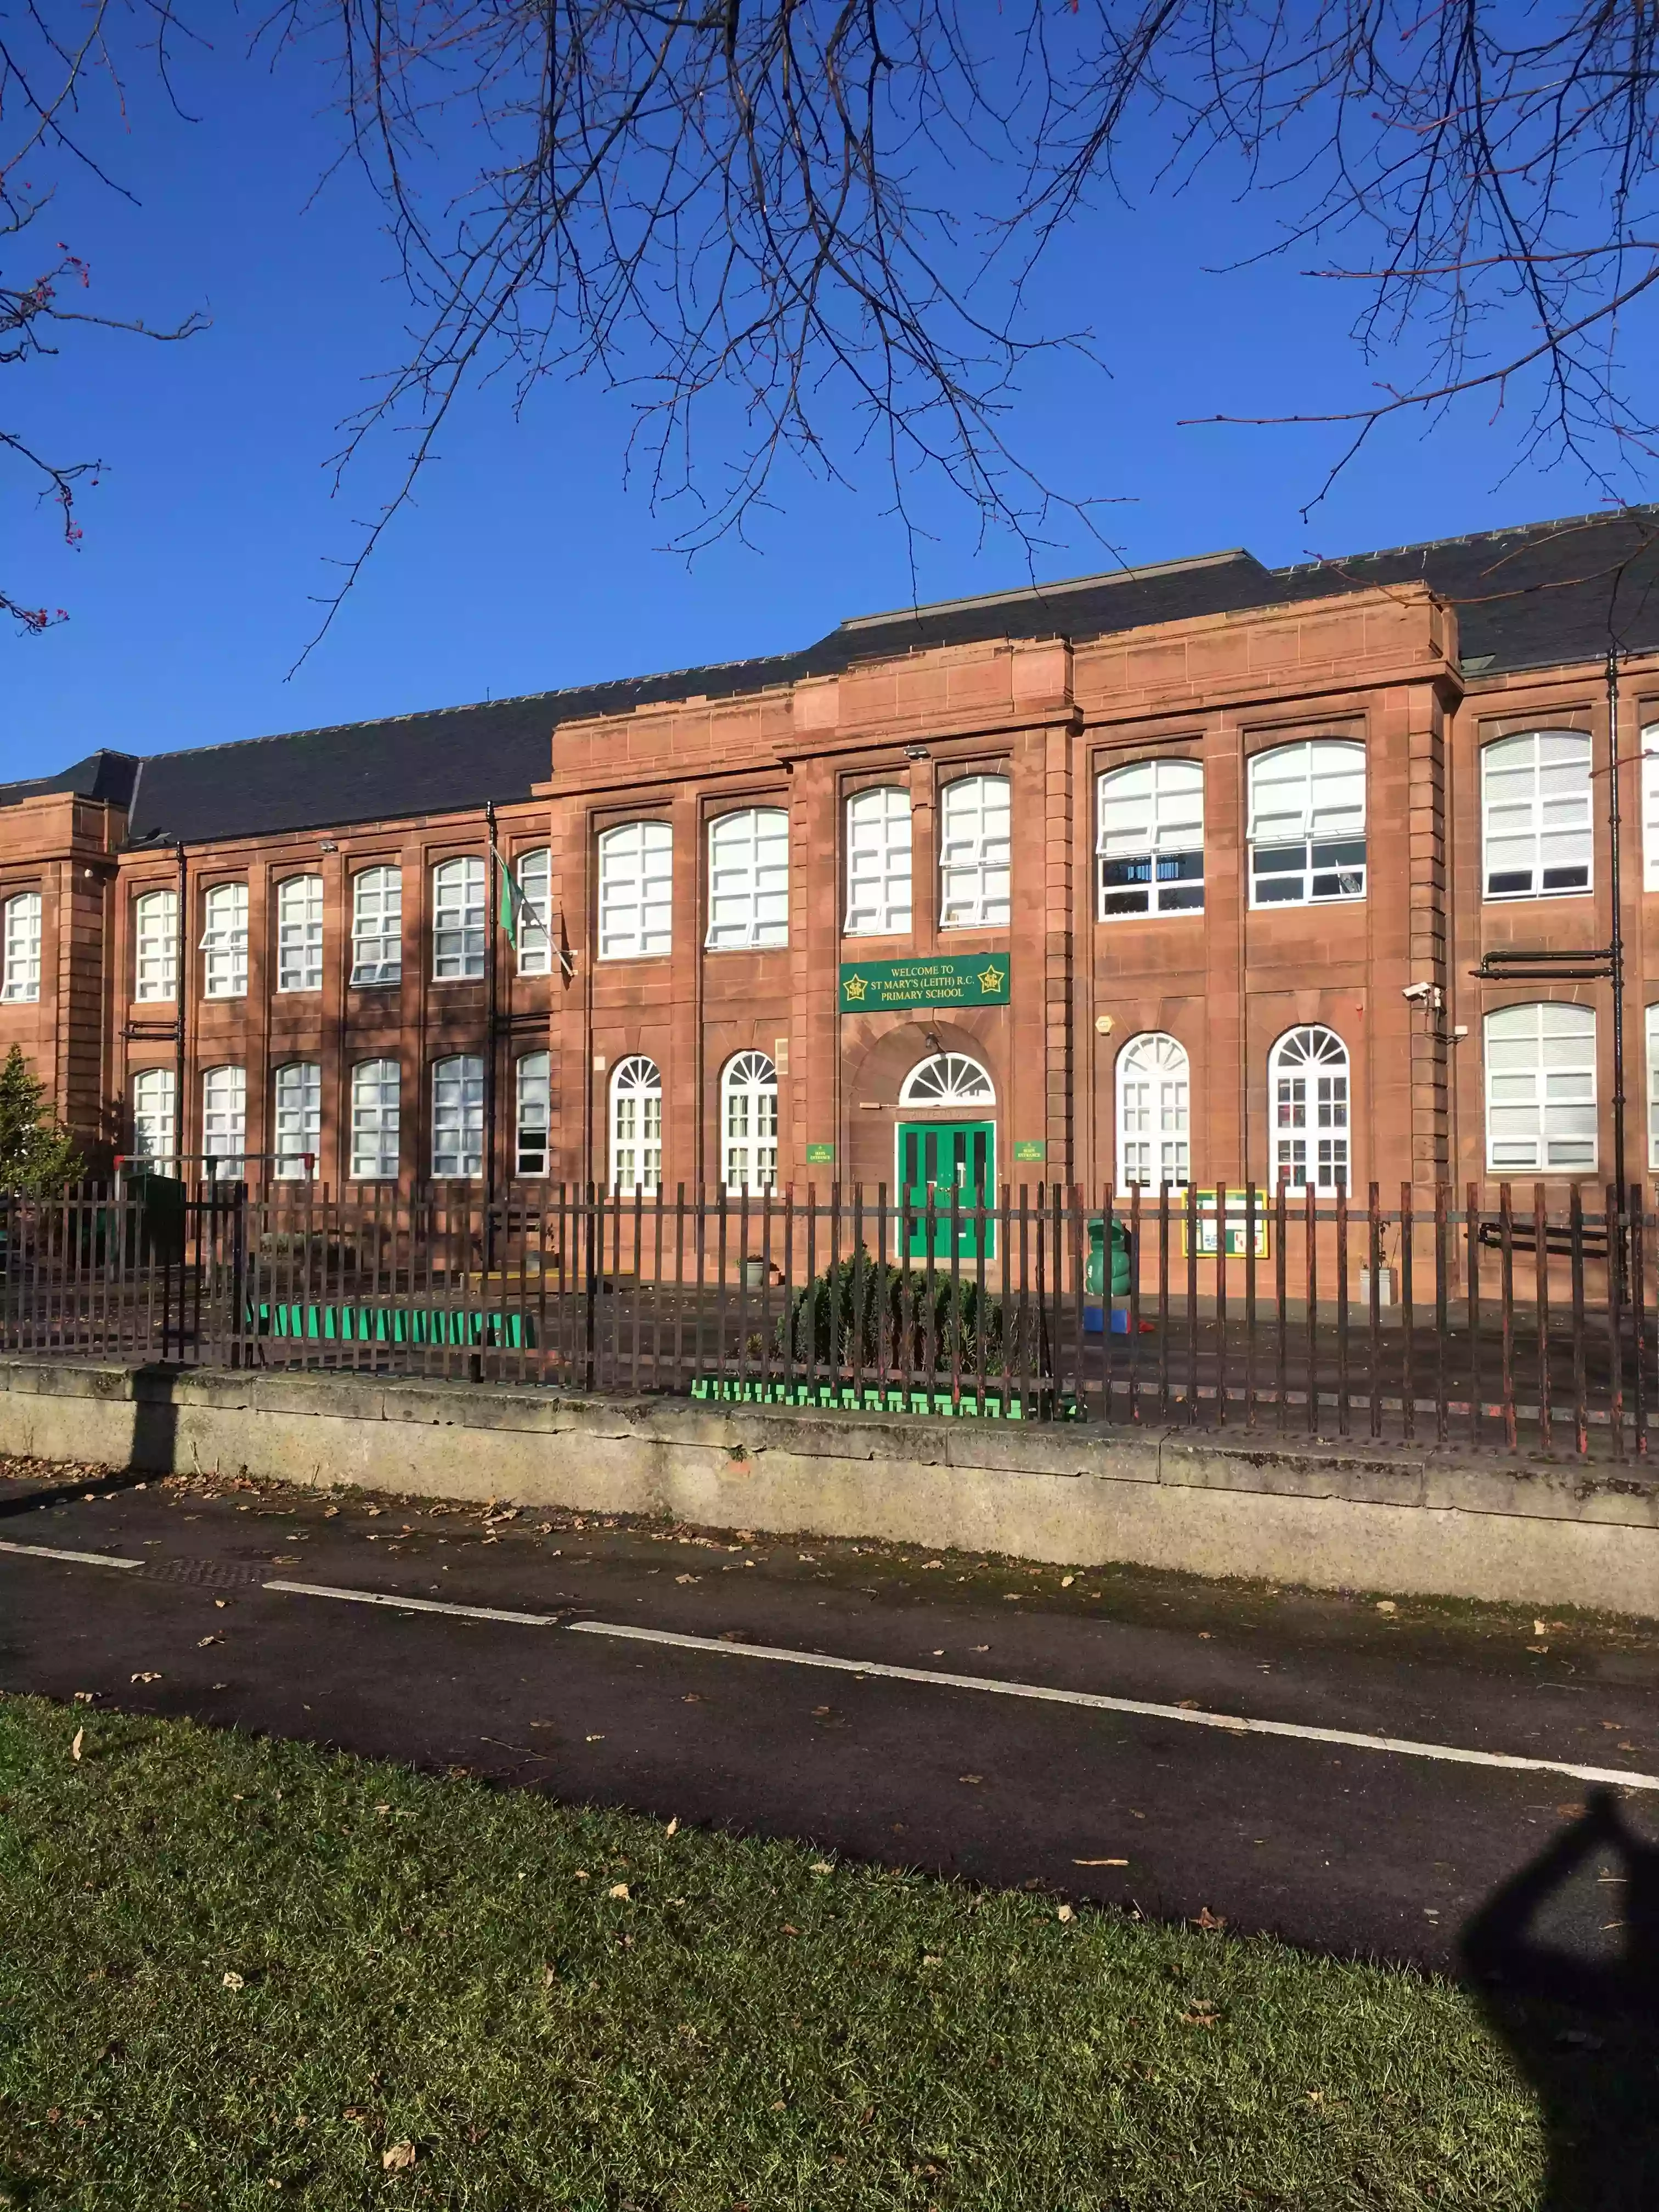 St Mary's (Leith) R C Primary School